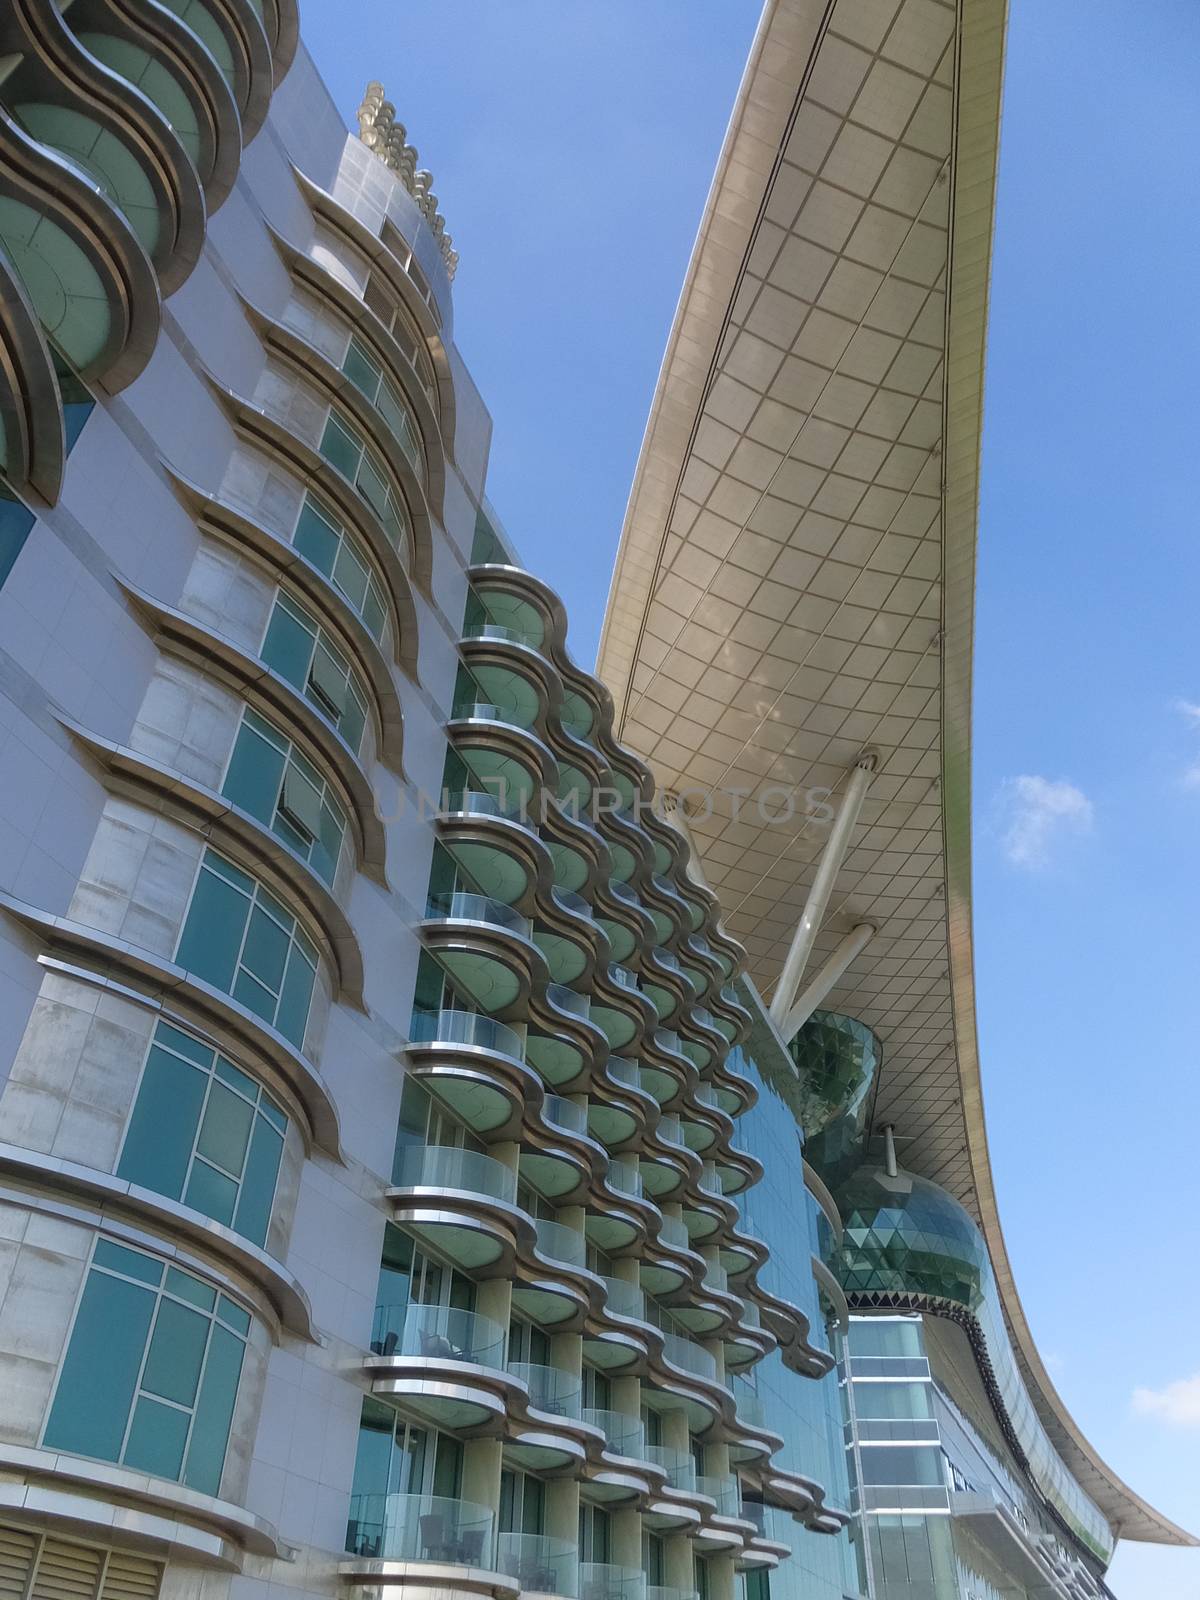 Meydan Hotel in Dubai, UAE by sainaniritu